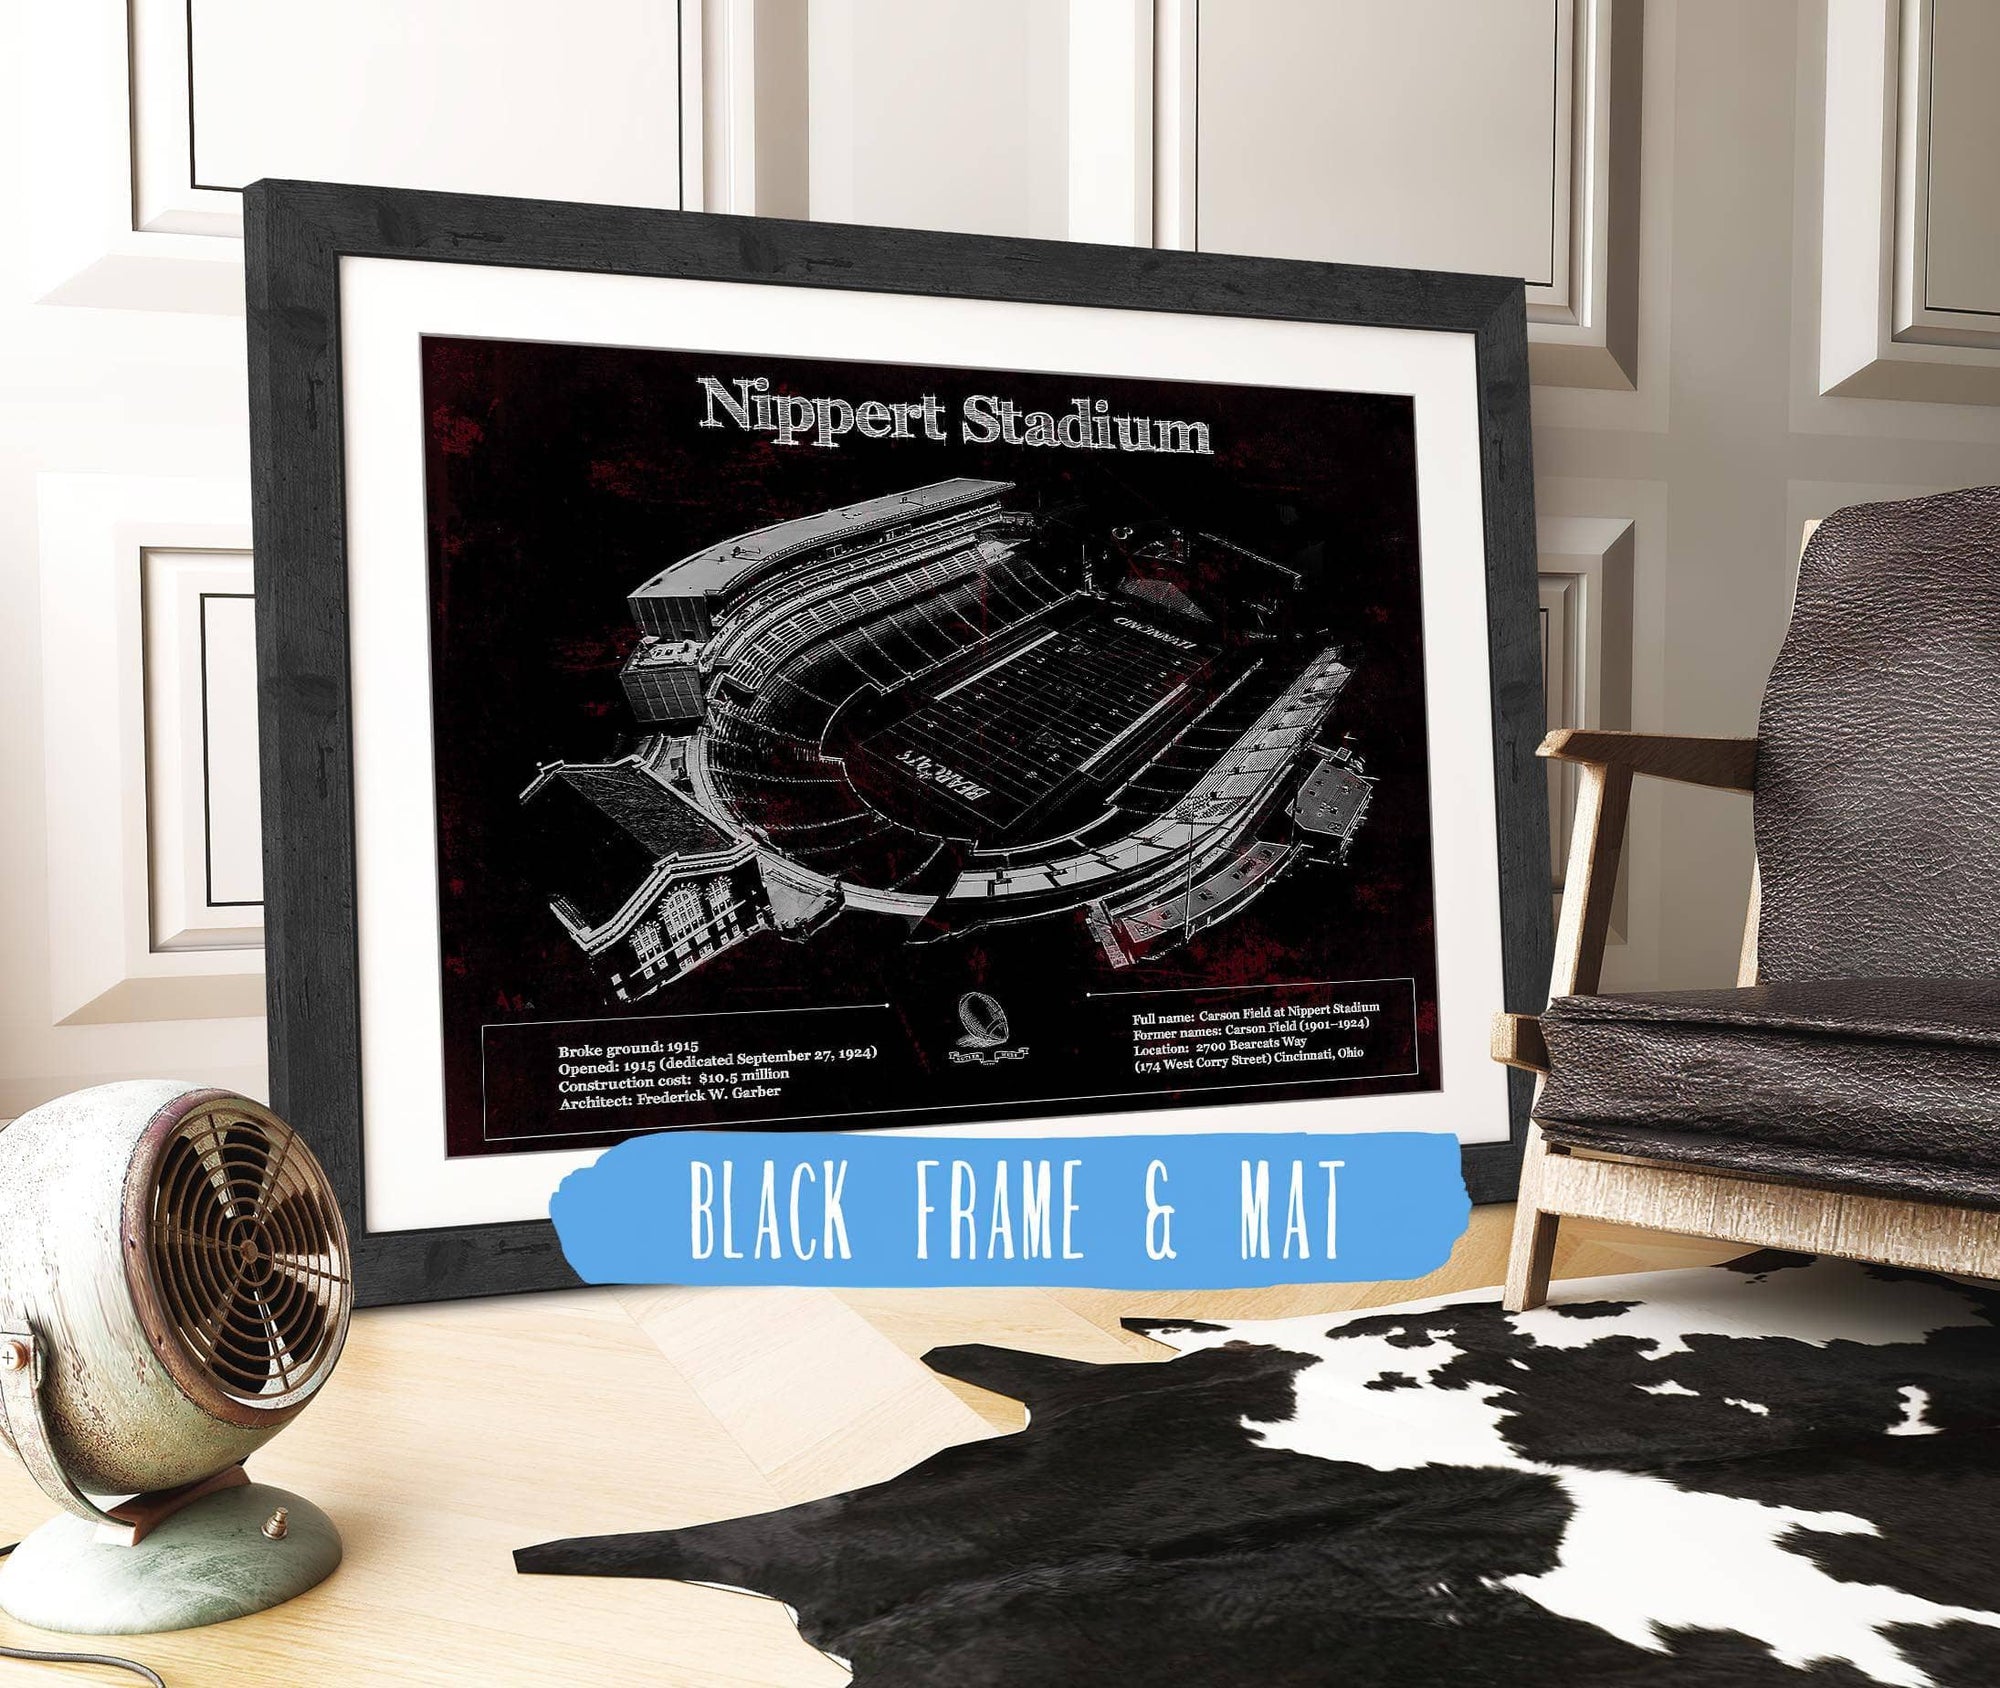 Cutler West Pro Football Collection 14" x 11" / Black Frame & Mat Cincinnati Bearcats - Vintage Nippert Stadium Team Color Art Print 9488864841_53425